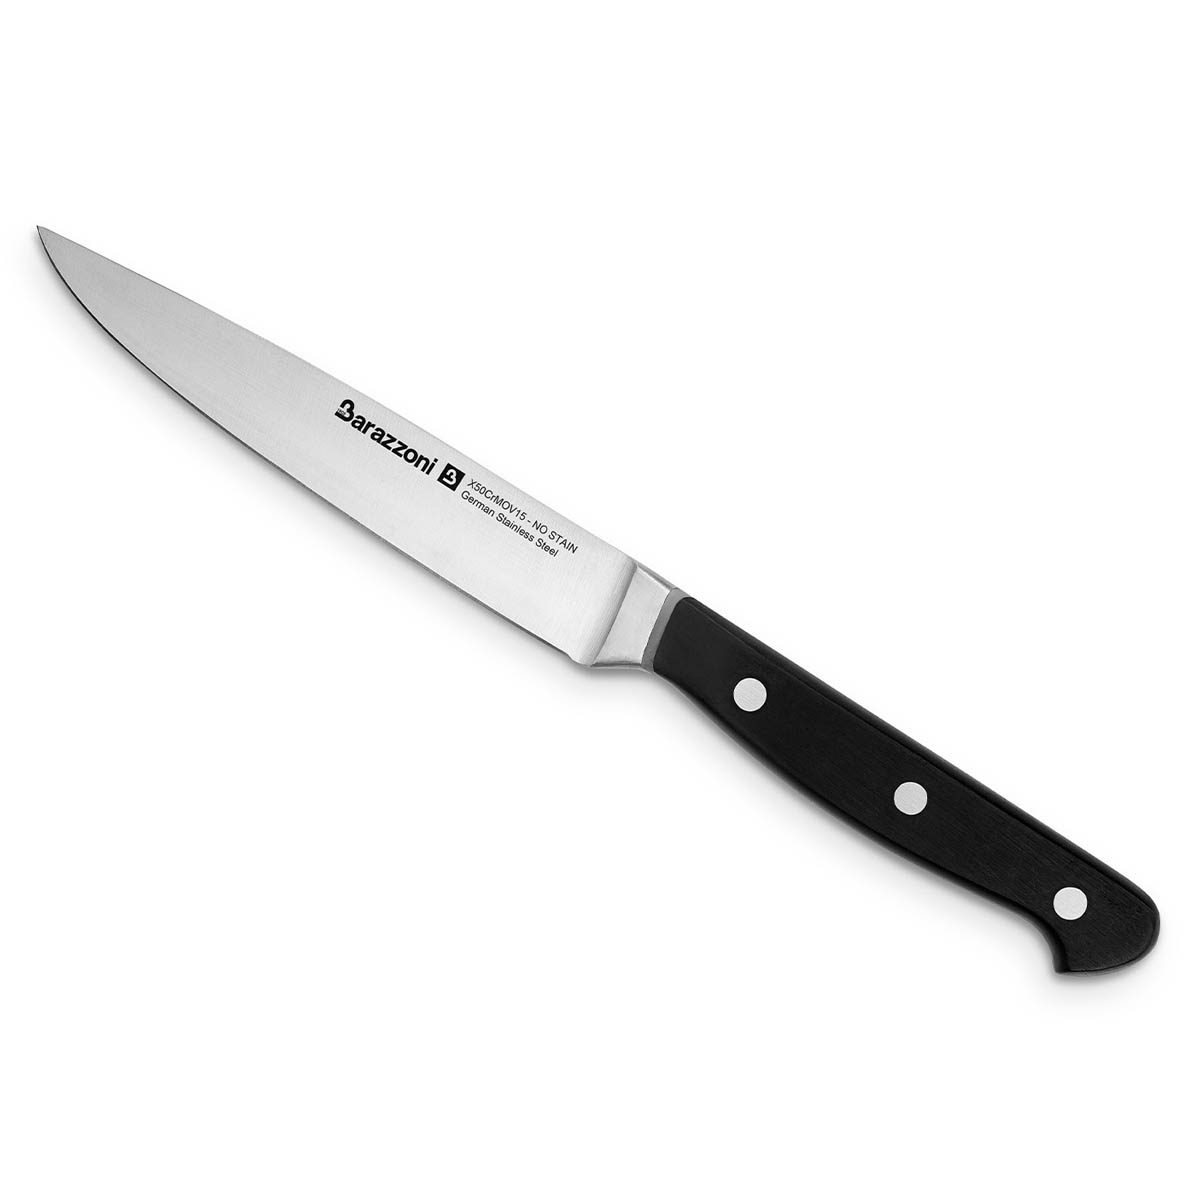 Нож универсальный Barazzoni Barazzoni 802170045, цвет серебристый - фото 1